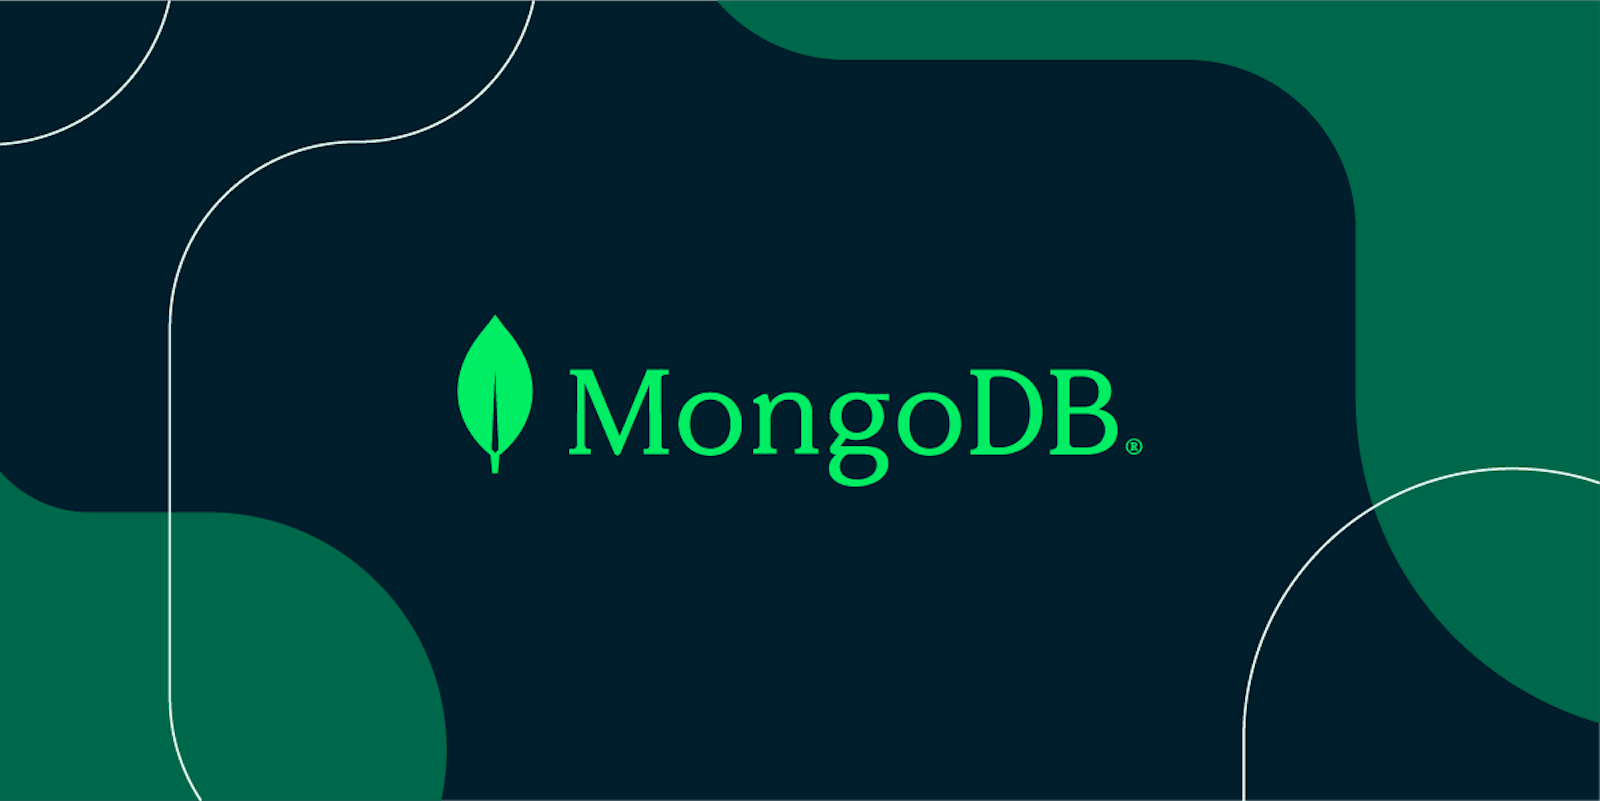 MongoDB Essentials in 20 Minutes